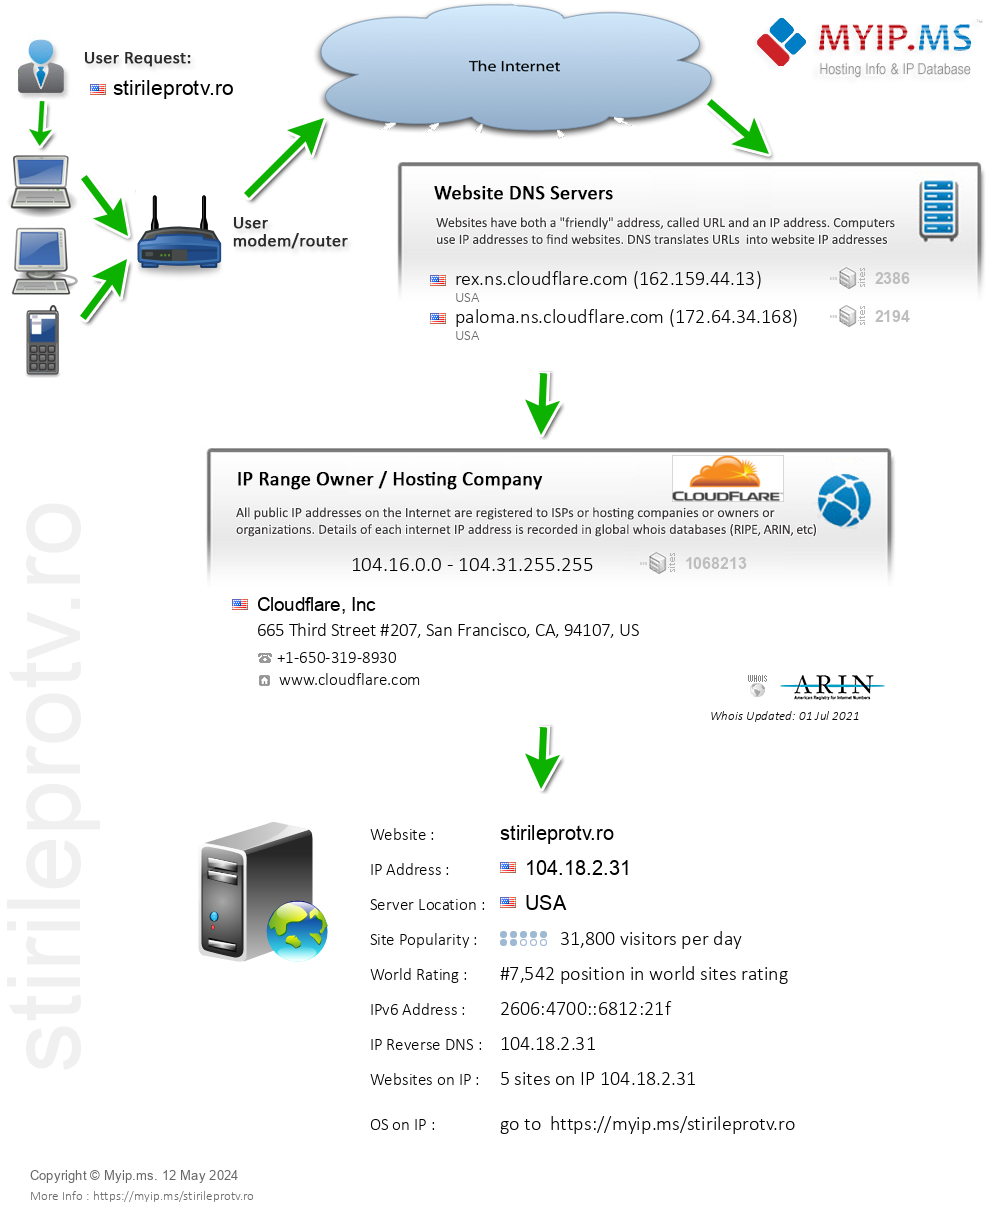 Stirileprotv.ro - Website Hosting Visual IP Diagram